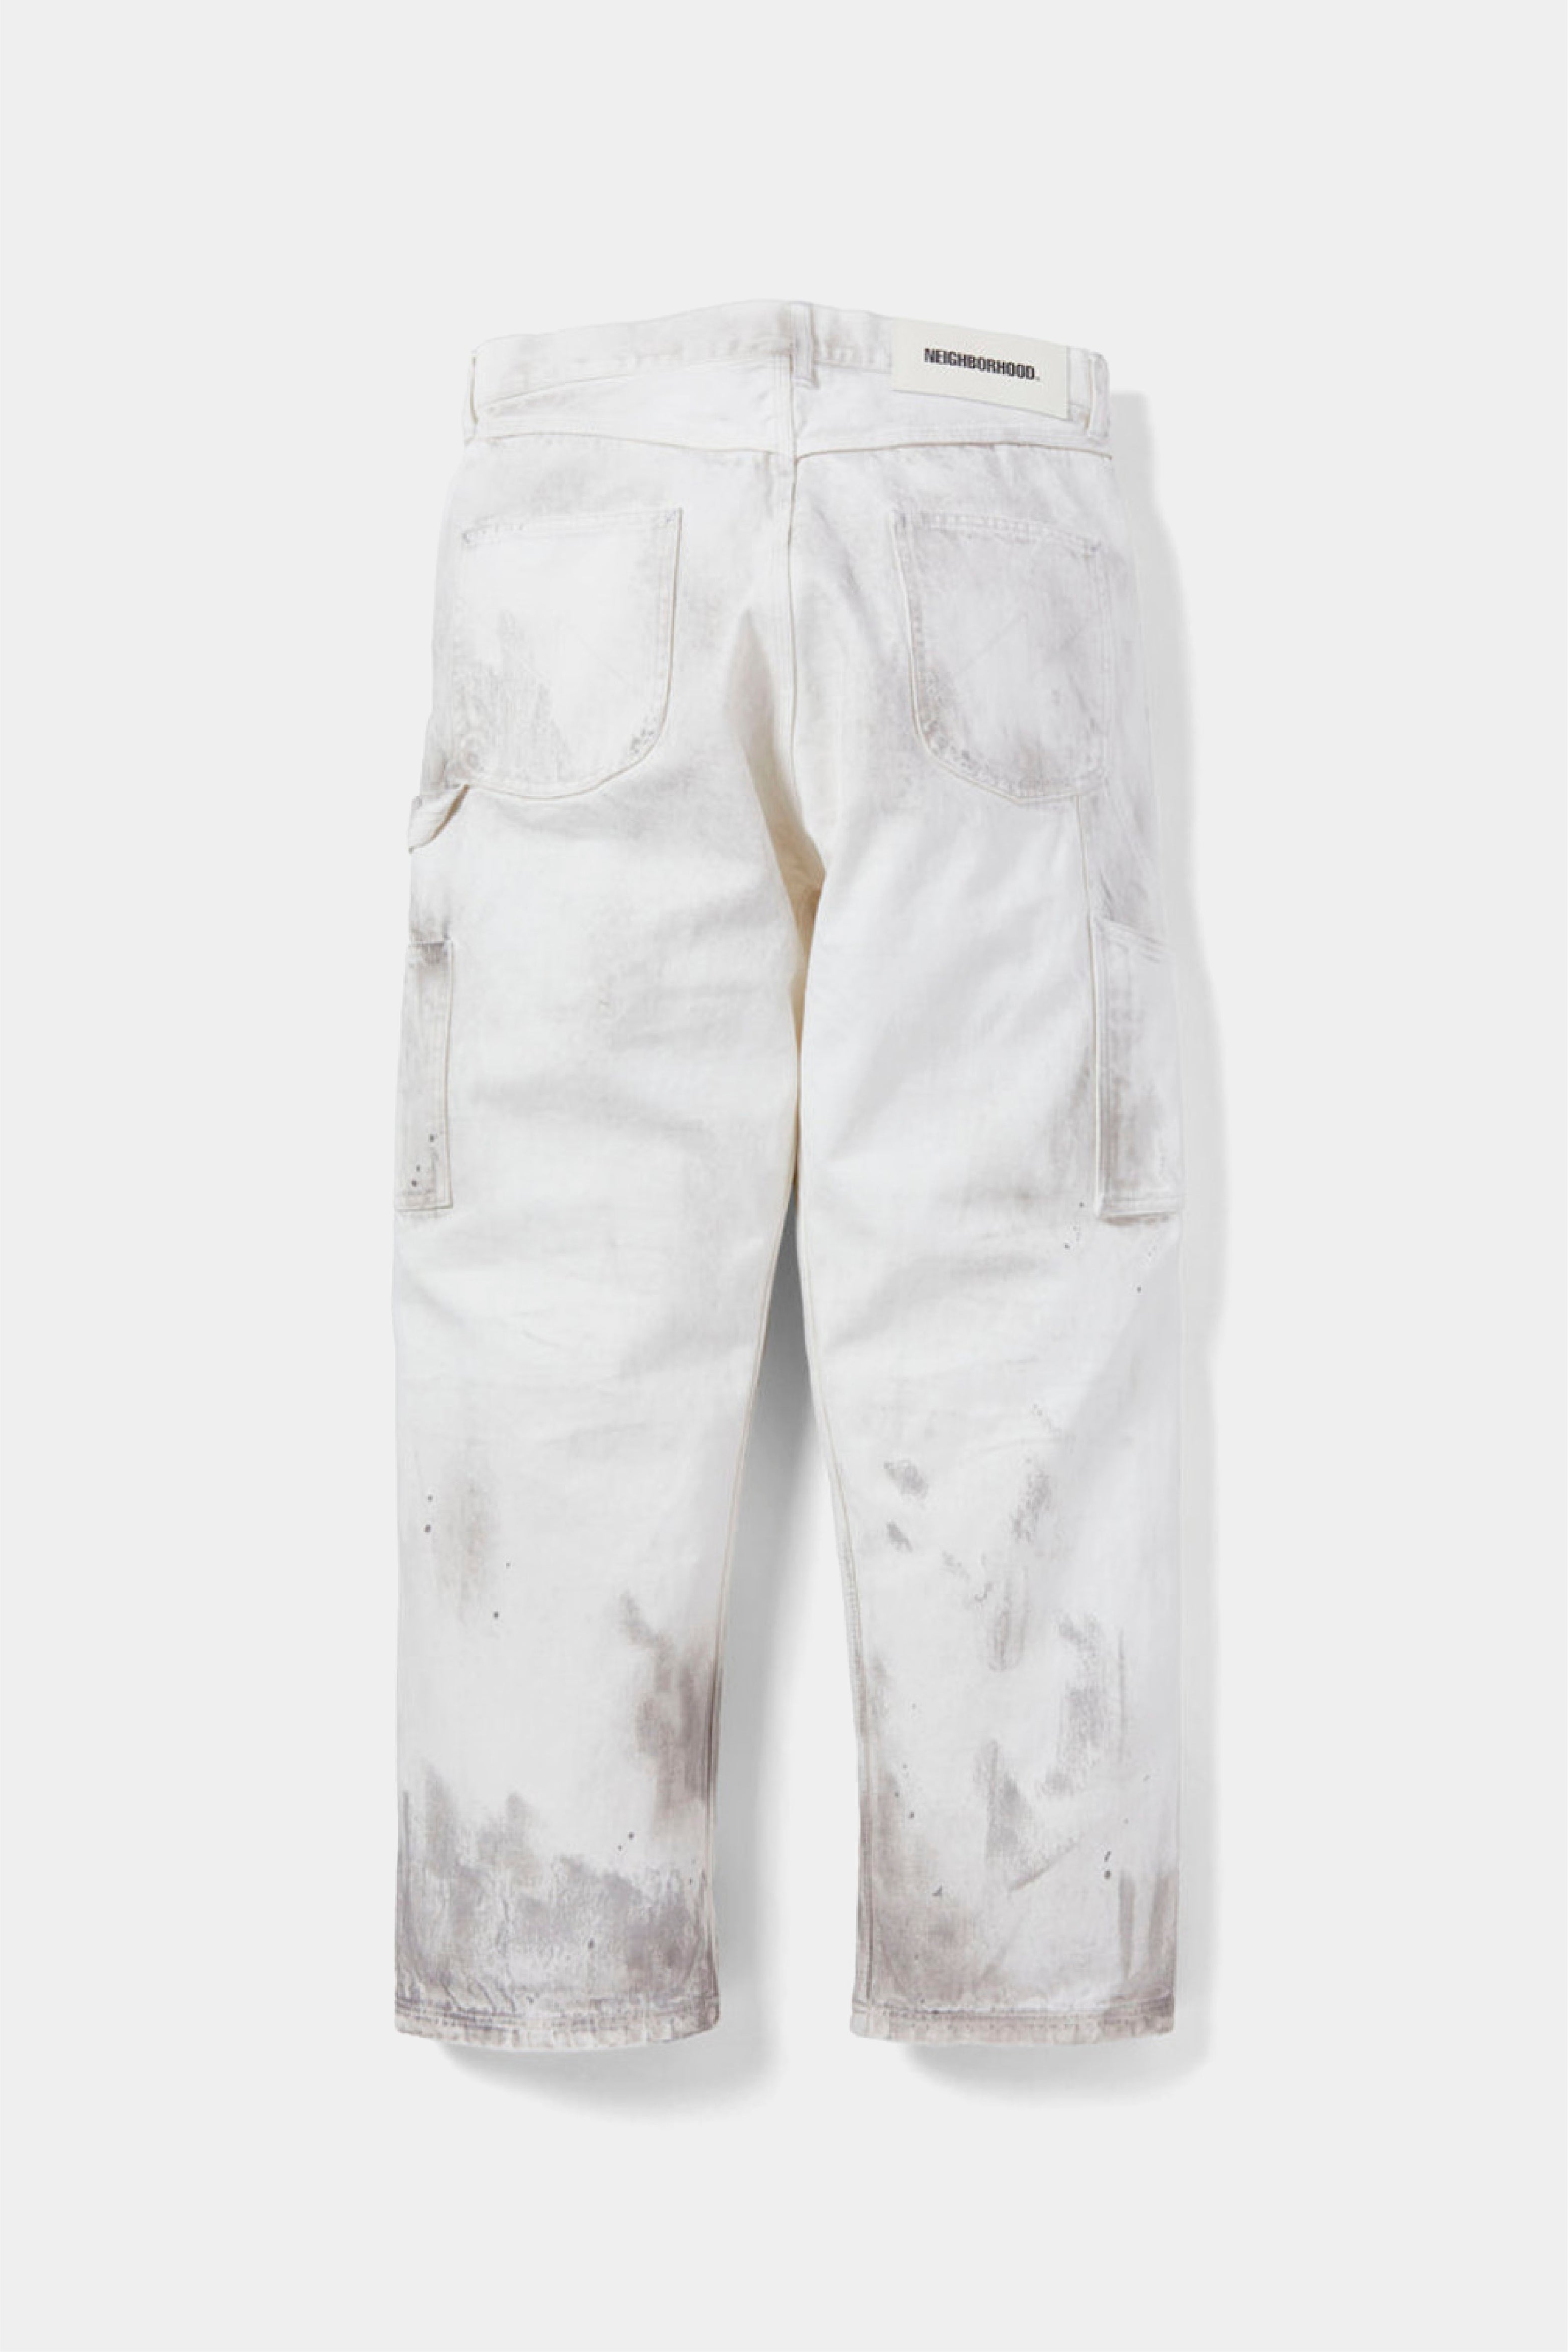 Selectshop FRAME - NEIGHBORHOOD White Painter Pant Bottoms Dubai